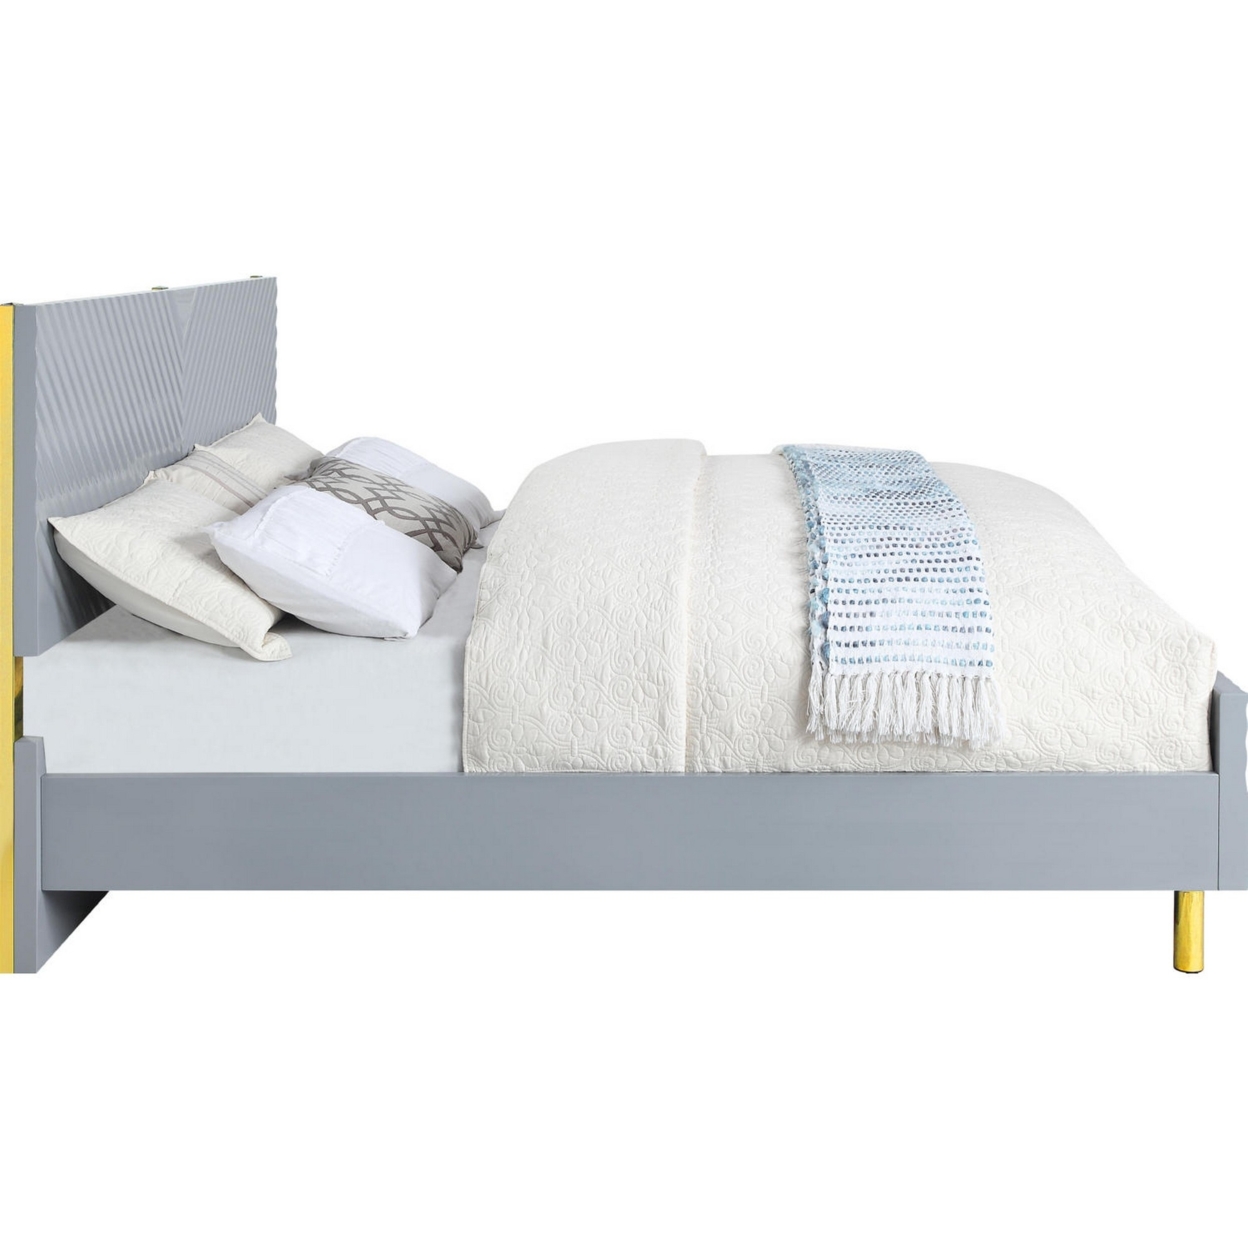 Tyra Modern Queen Bed, Panel Headboard, Textured Chevron, Slate Gray, Gold- Saltoro Sherpi